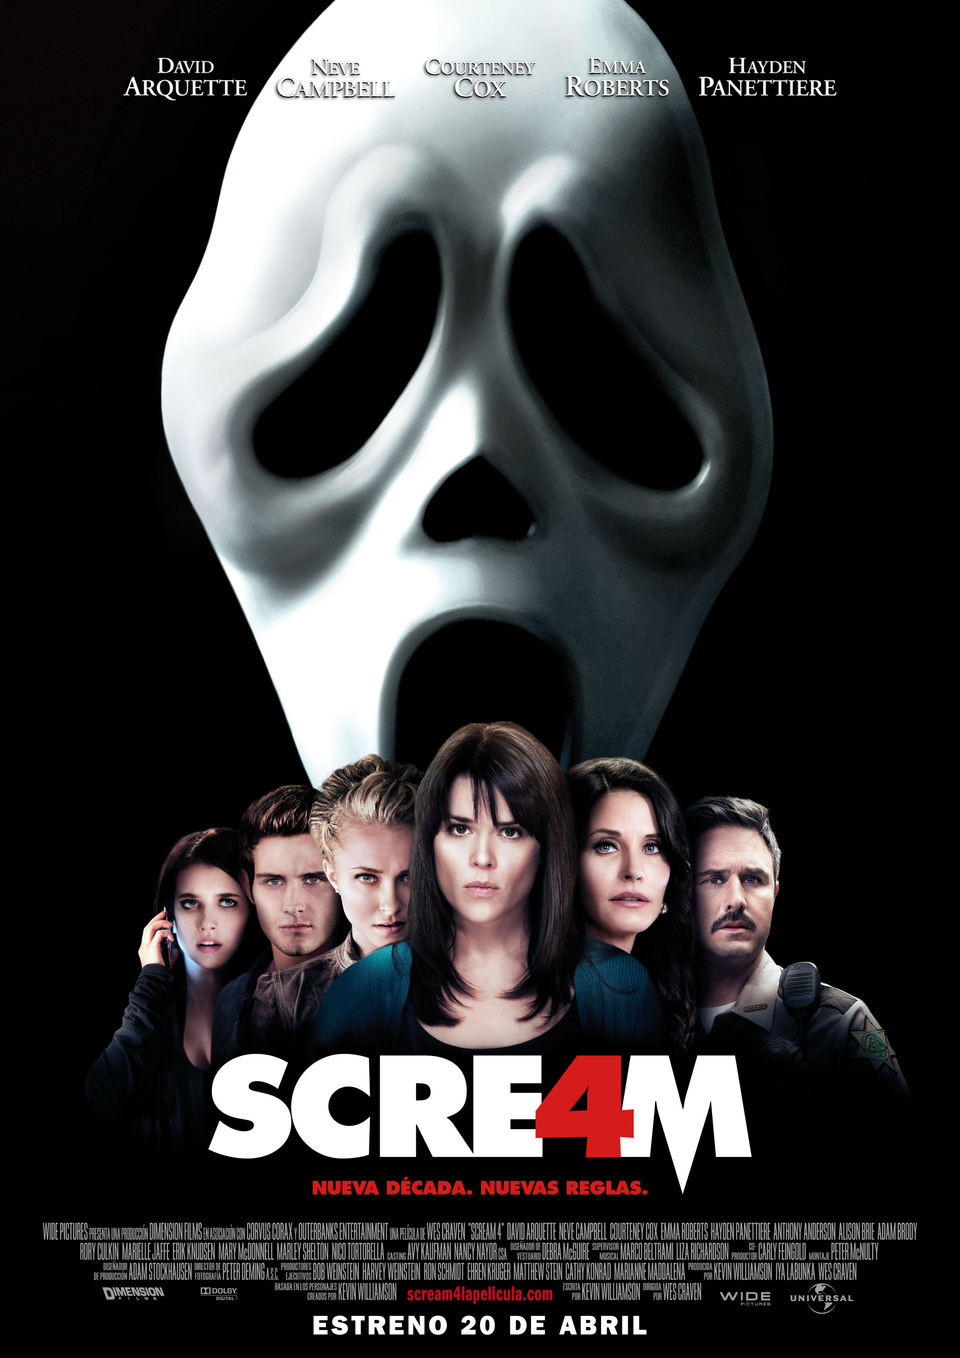 Scream 4 003-scream-4-espana.jpg#